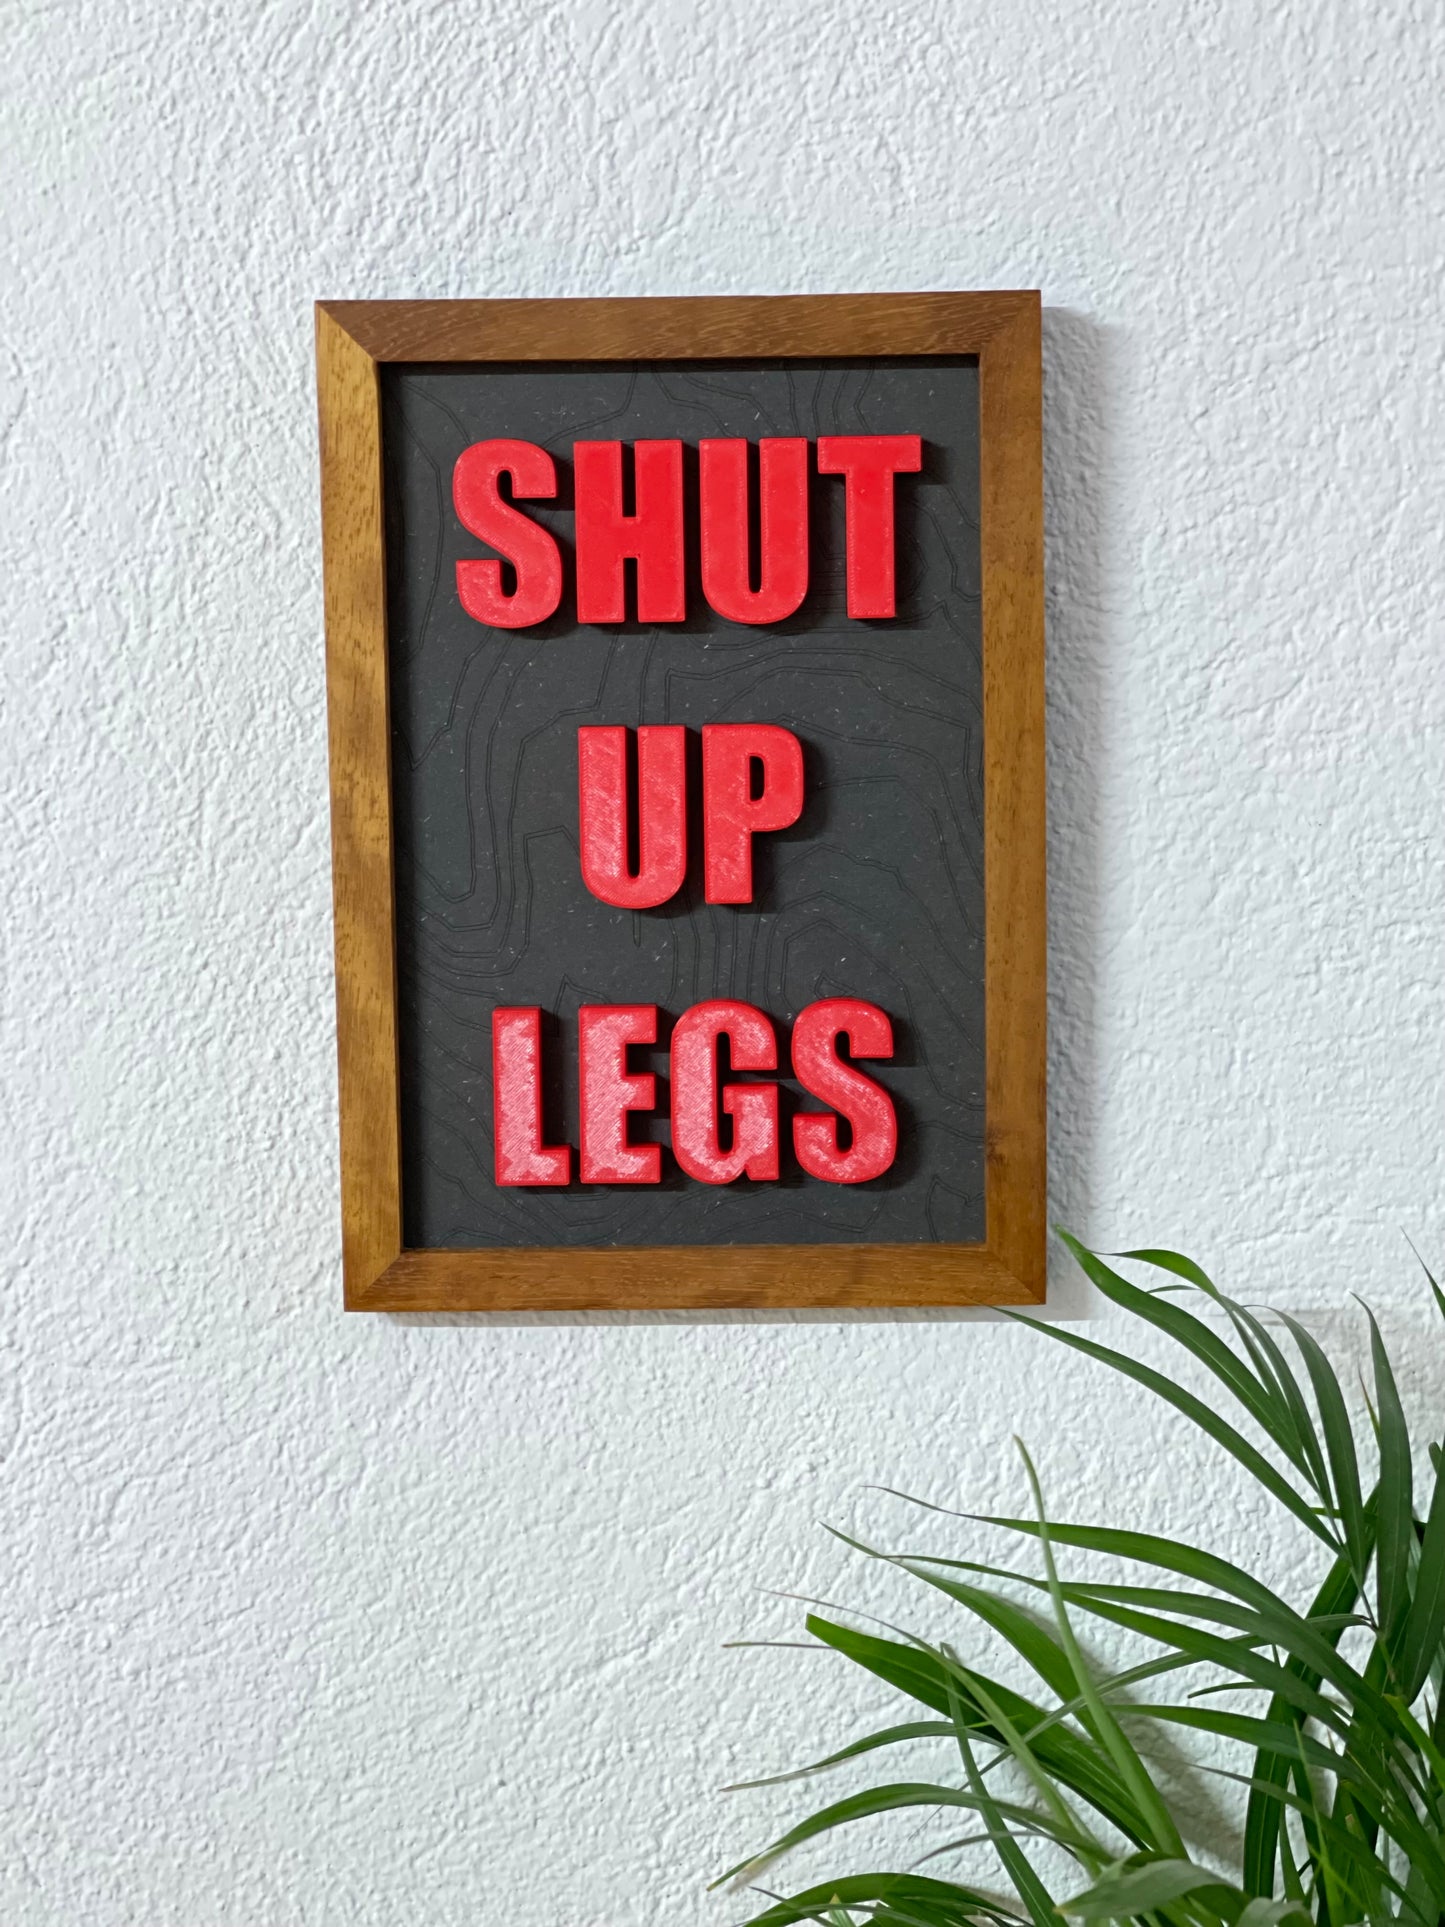 SHUT UP LEGS - Señales 3D